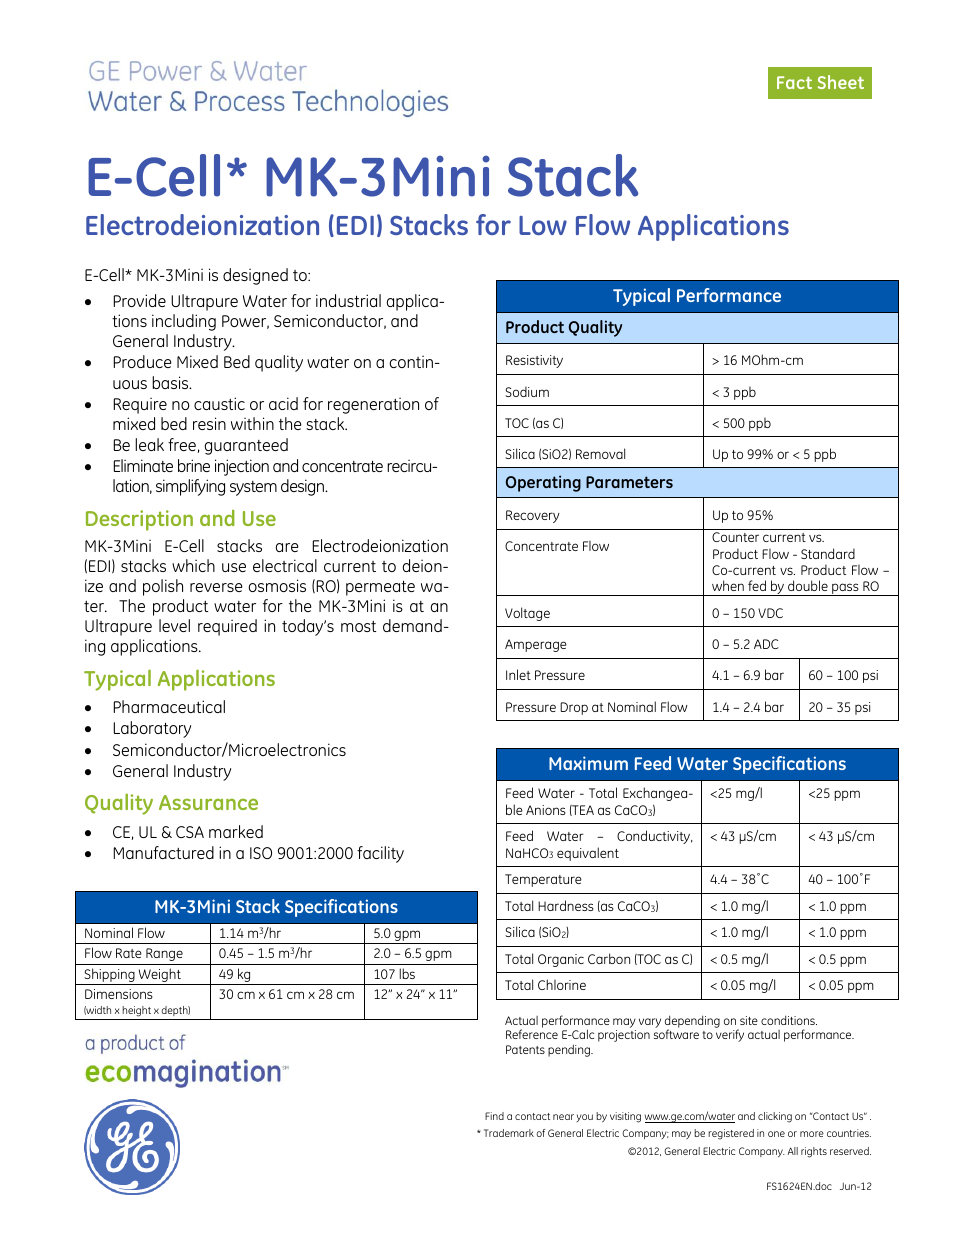 Electrodeionization (EDI) - E-Cell MK-3Mini Stack